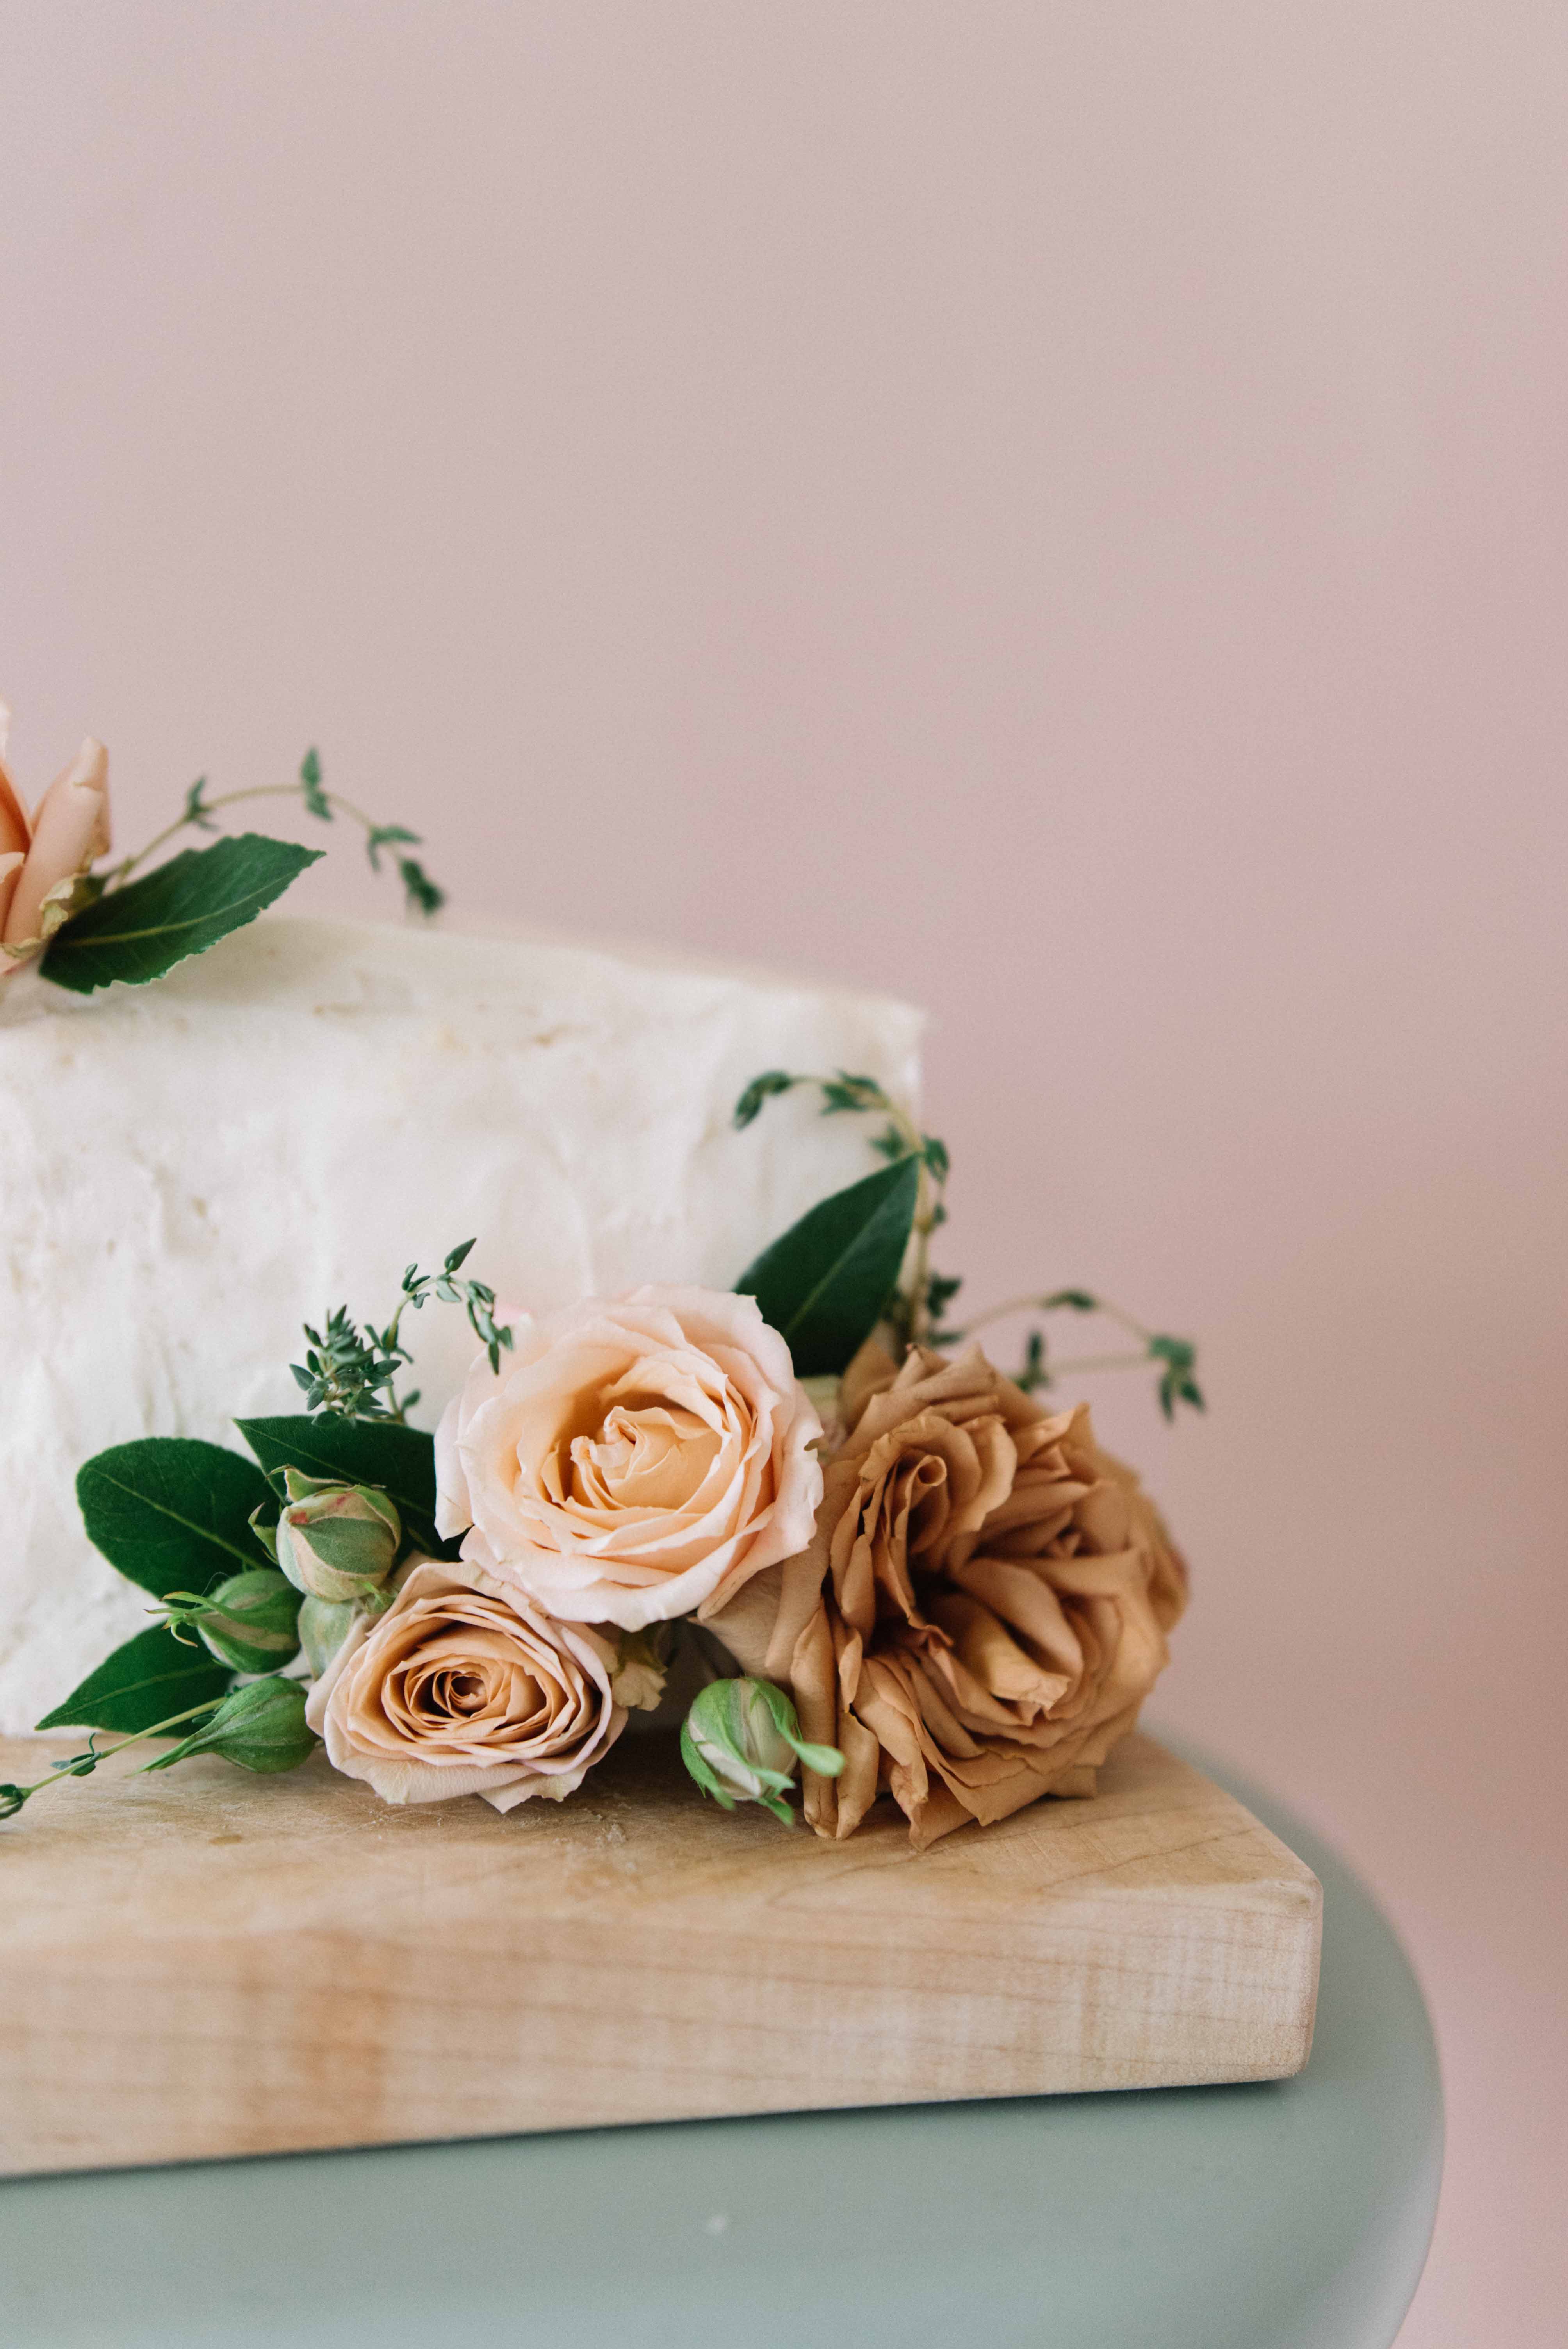 How to Arrange Fresh Flowers on Cakes